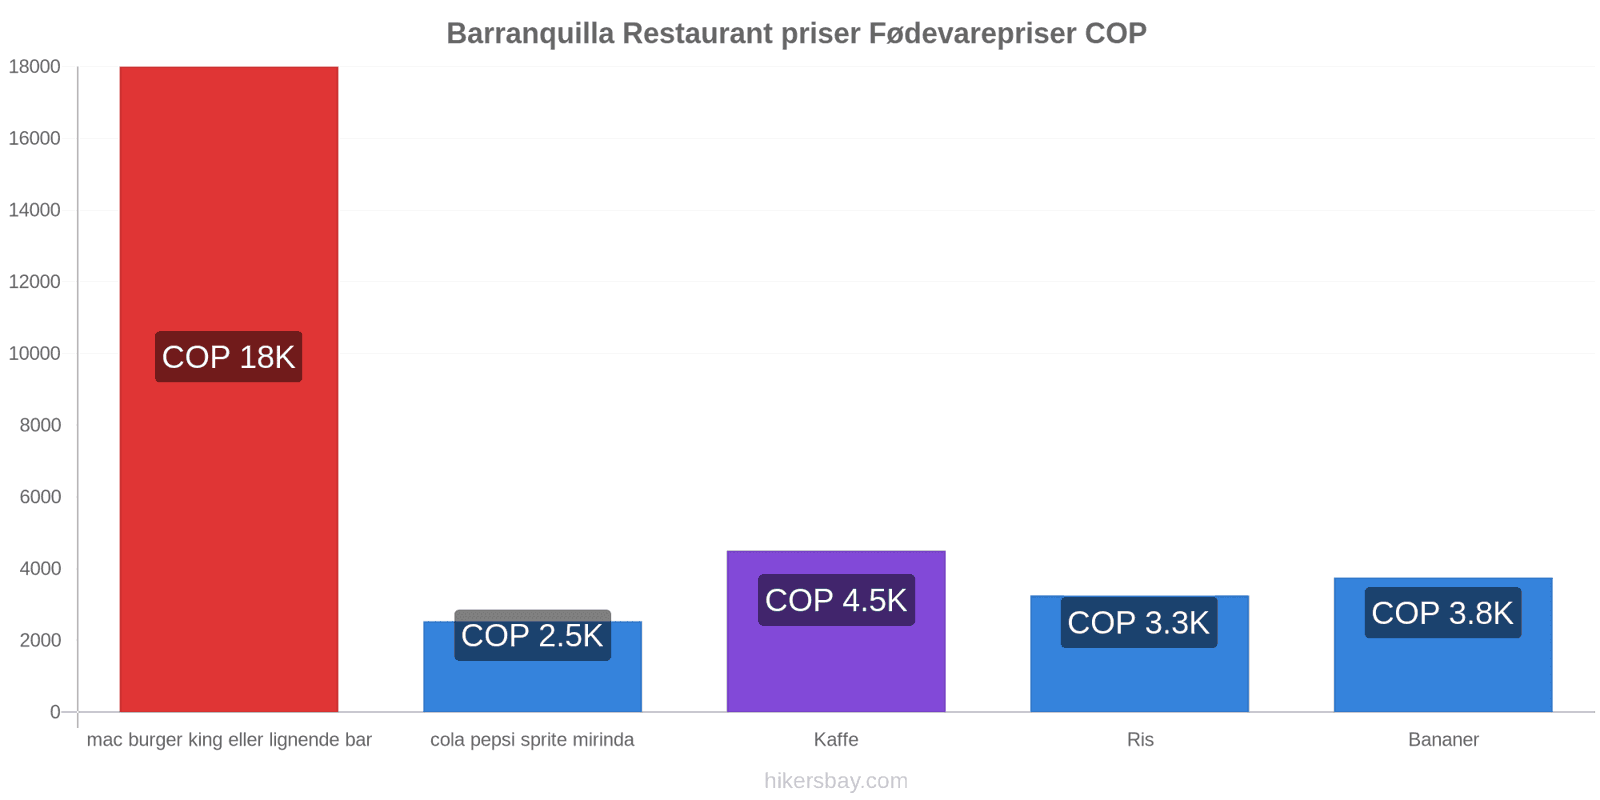 Barranquilla prisændringer hikersbay.com